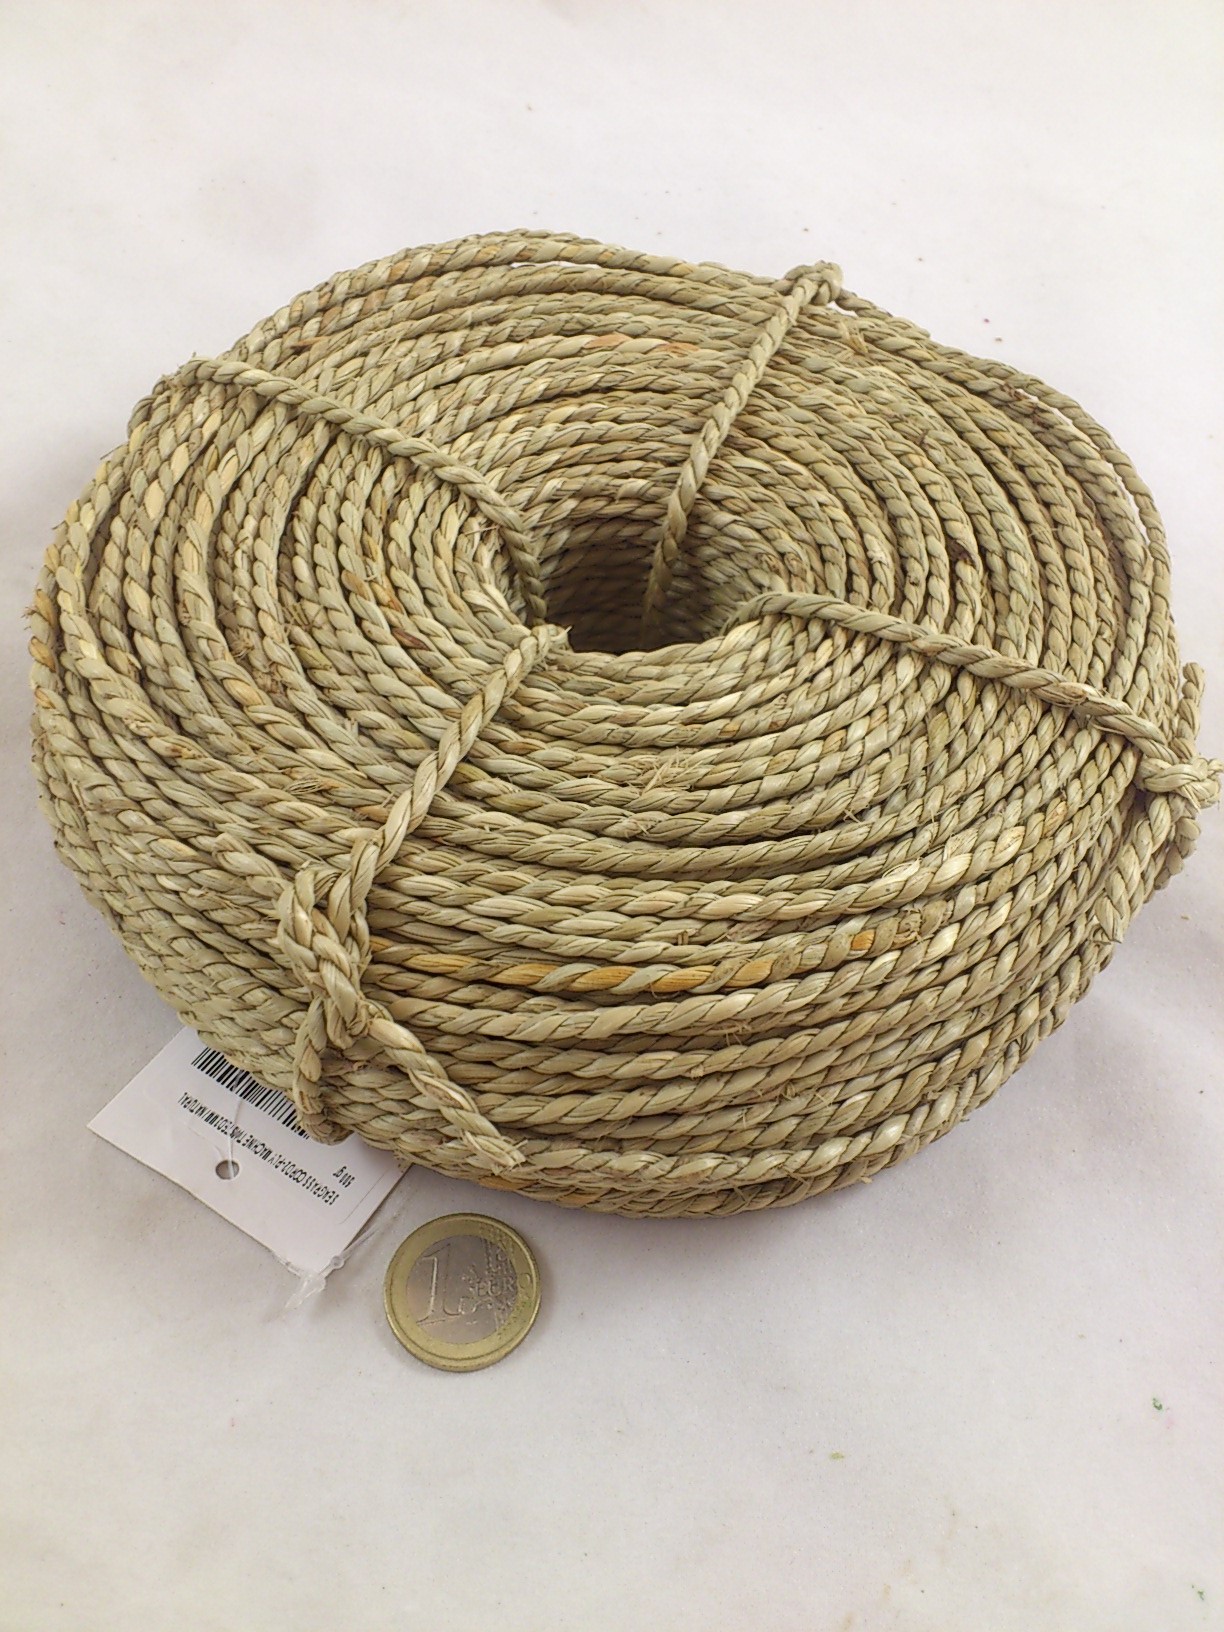 Rope Seagrass 500 gr. +/- 75 m. Ø 0.3 cm